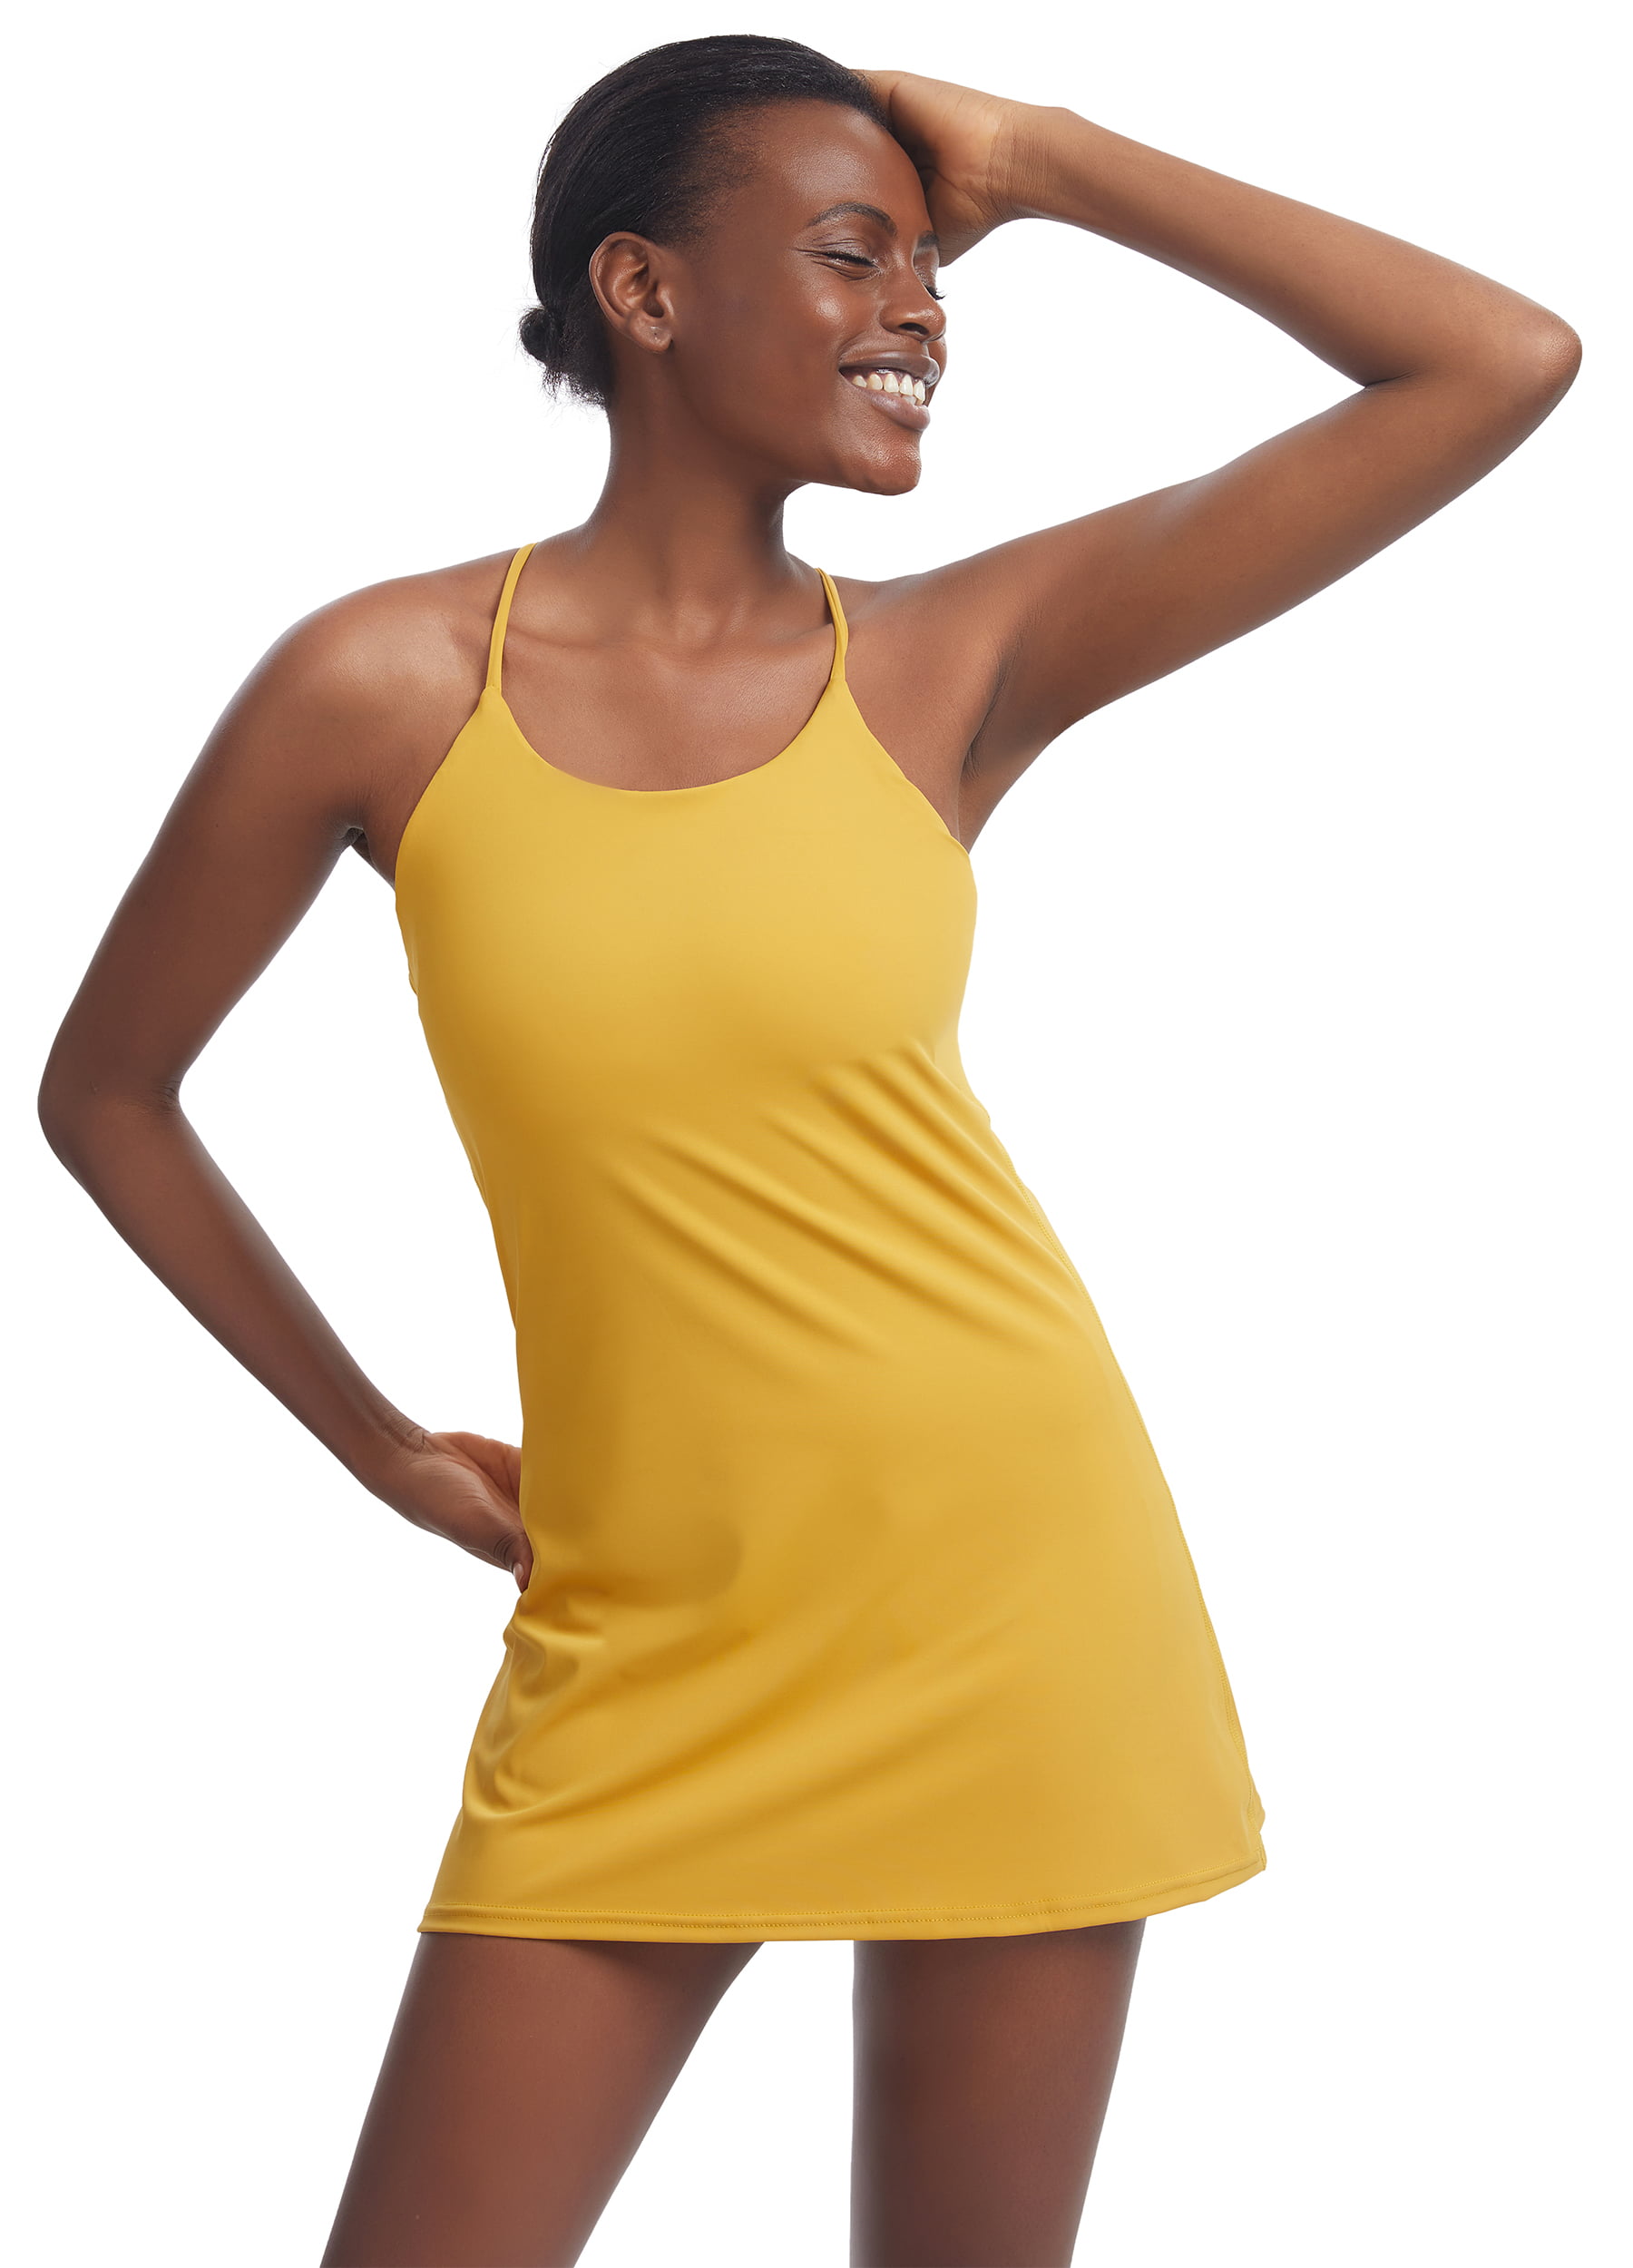 KUACUA Women's Sleeveless Workout Dress, Built-in Bra & Shorts with  Pockets, Athletic Dress for Golf Sportswear Tennis Dress Yellow 